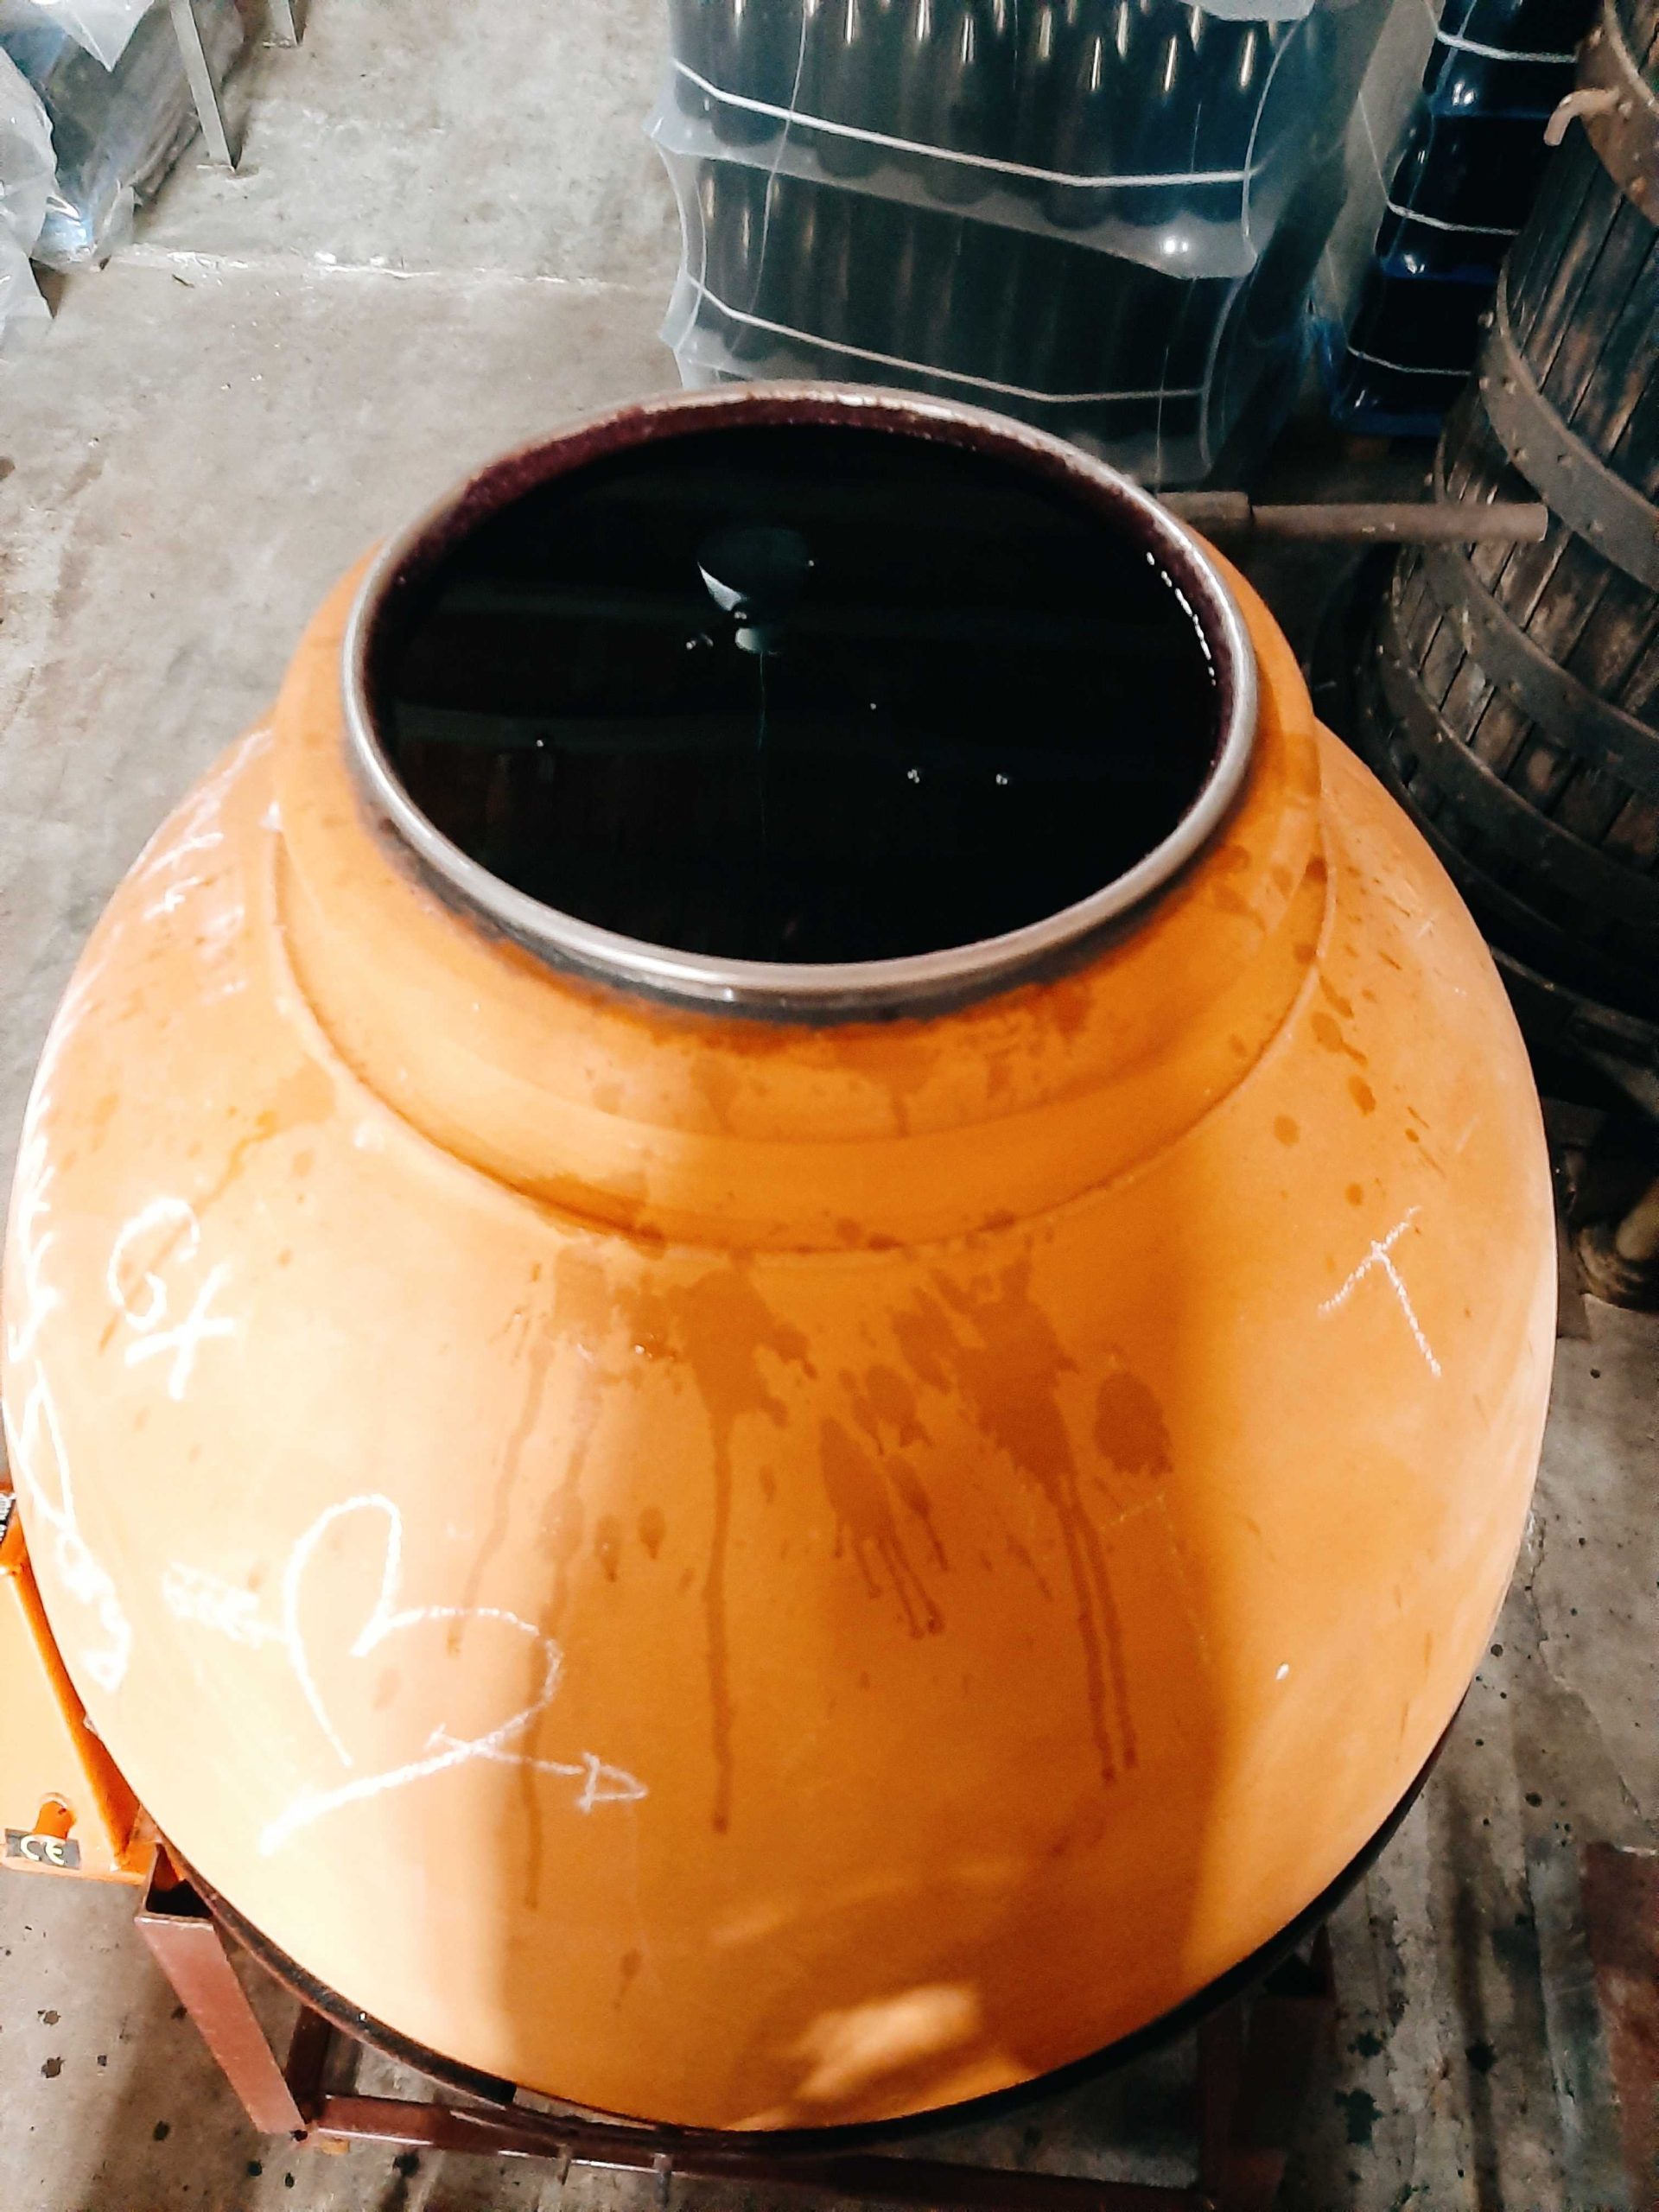 Amphora at Vinyes Tortuga